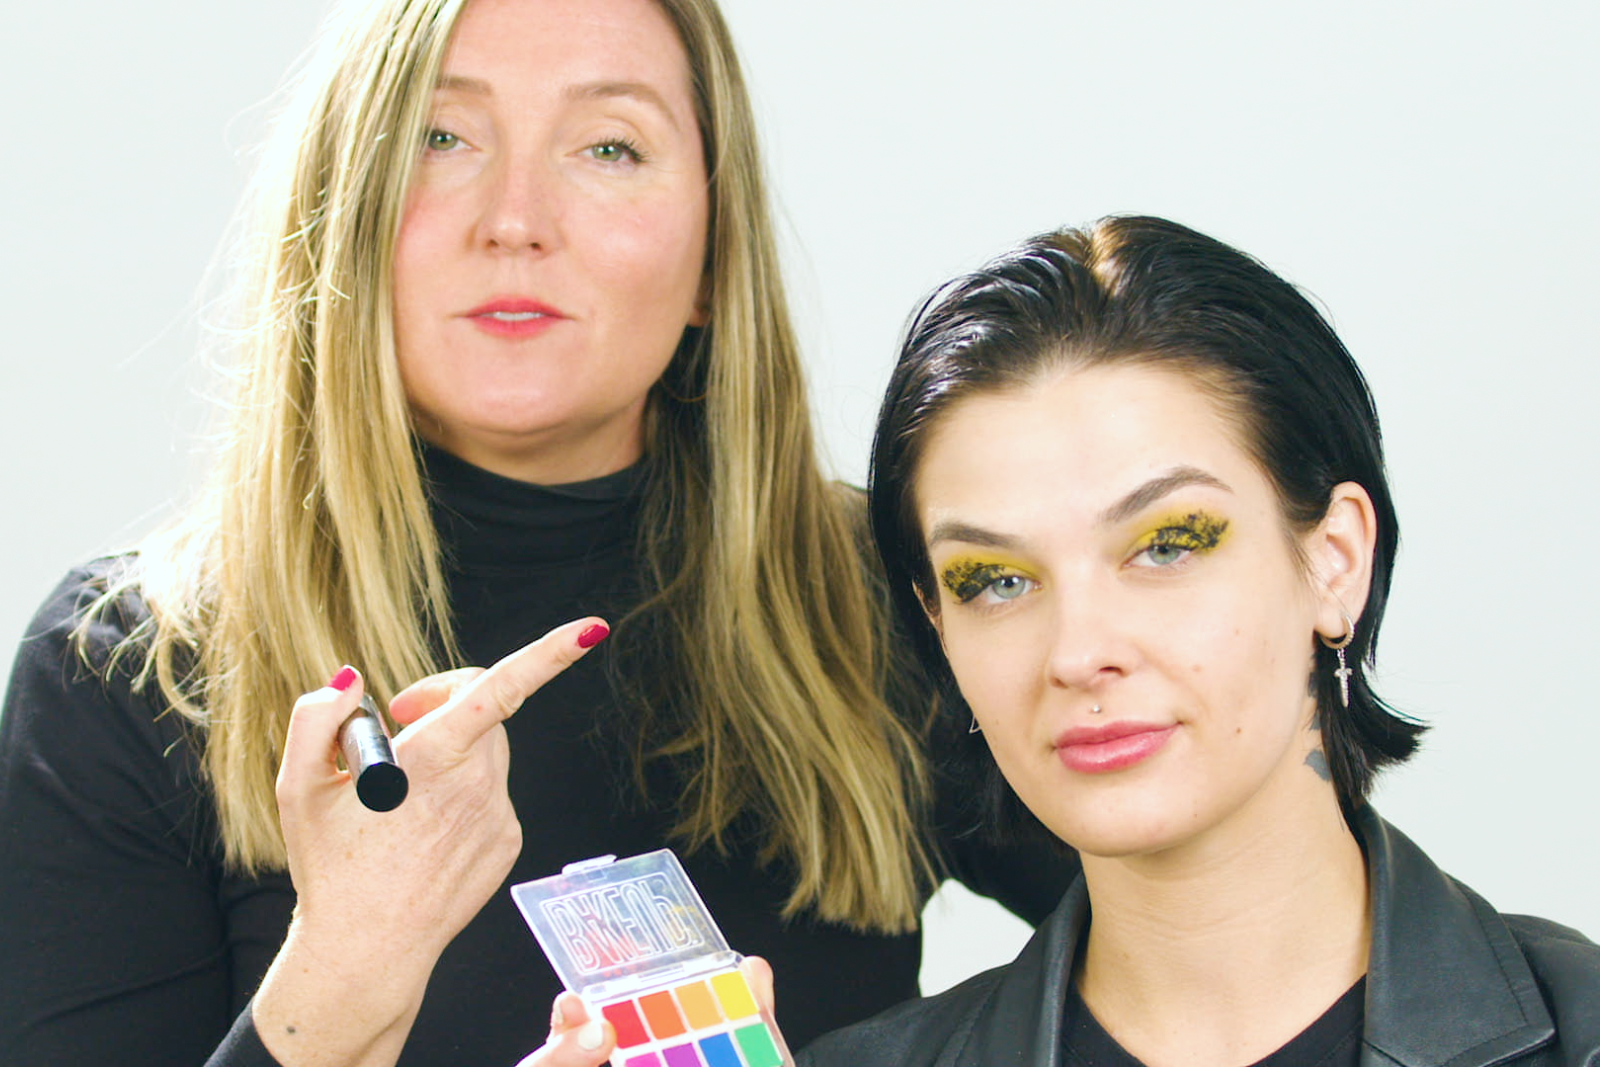 Get the Look: Doc Martens Inspired Makeup